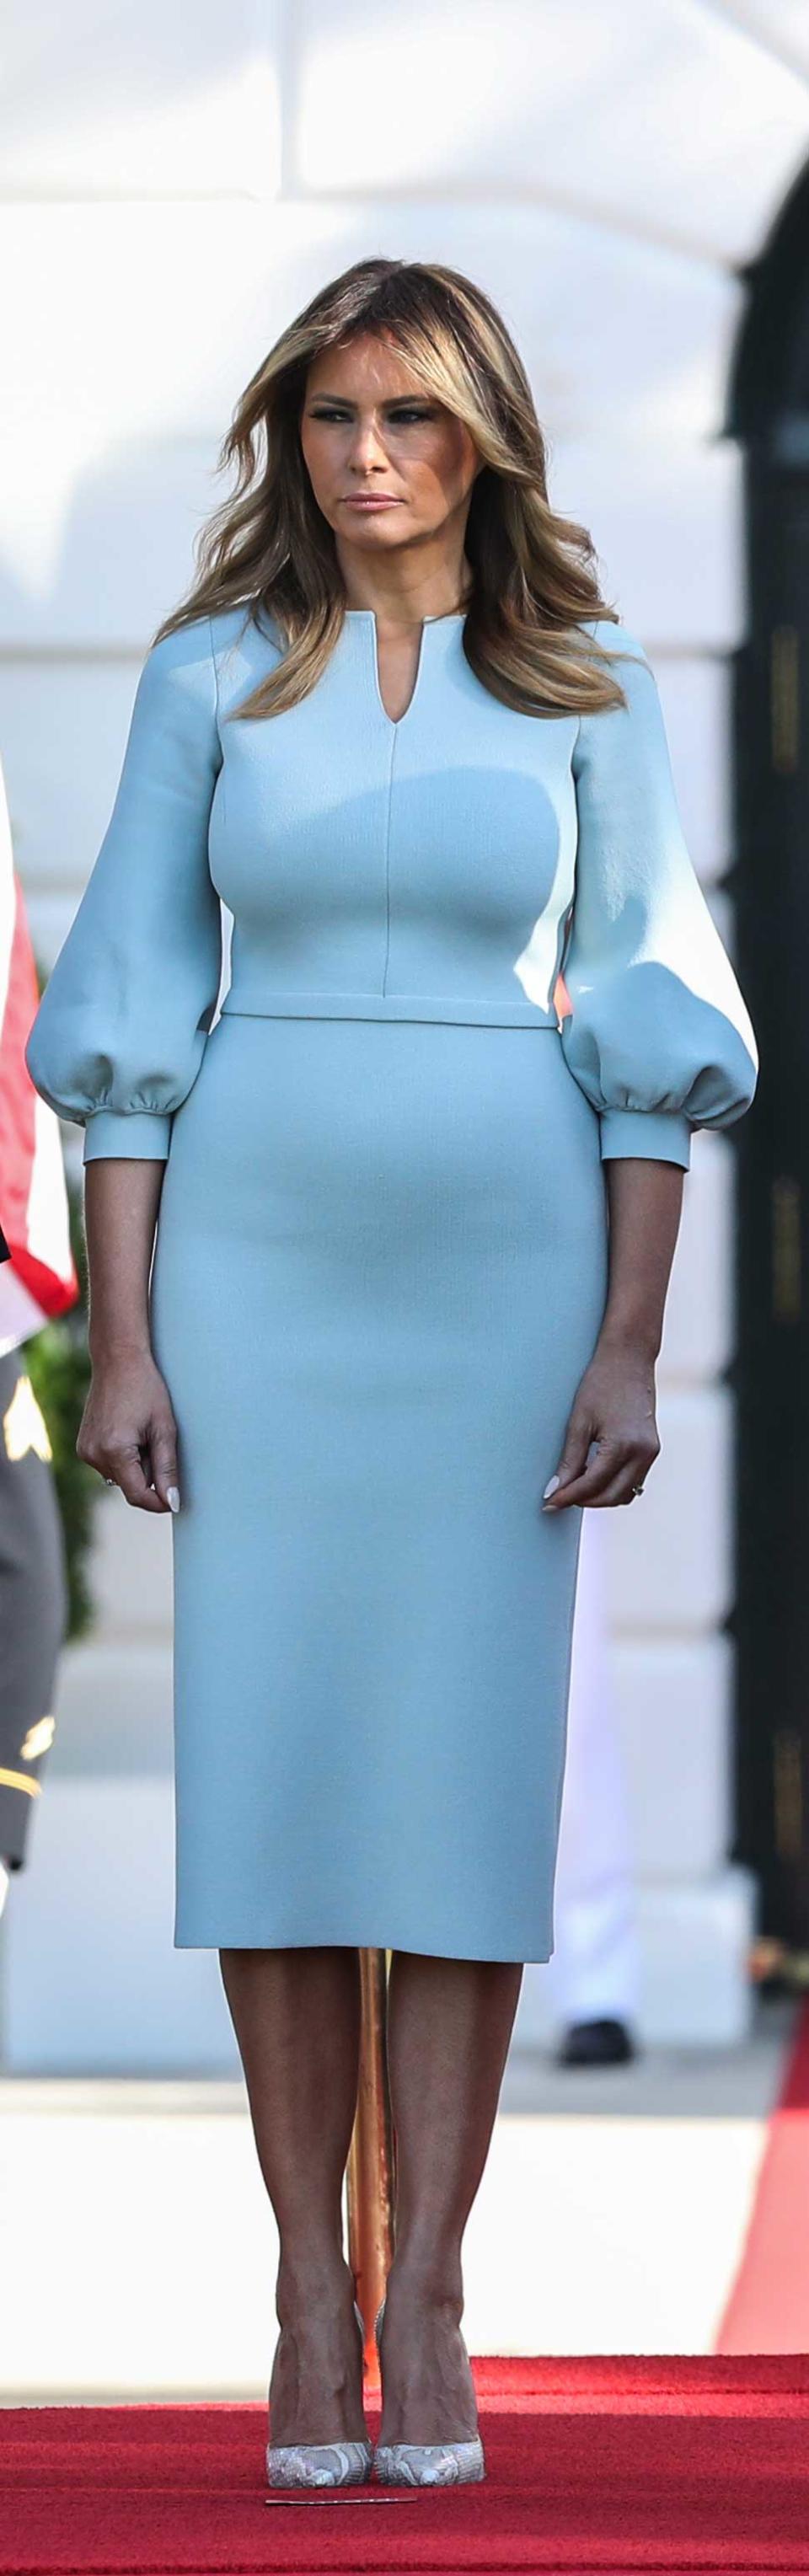 Melania Trump's dress was designed by Australian label Scanlan Theodore [Photo: PA]